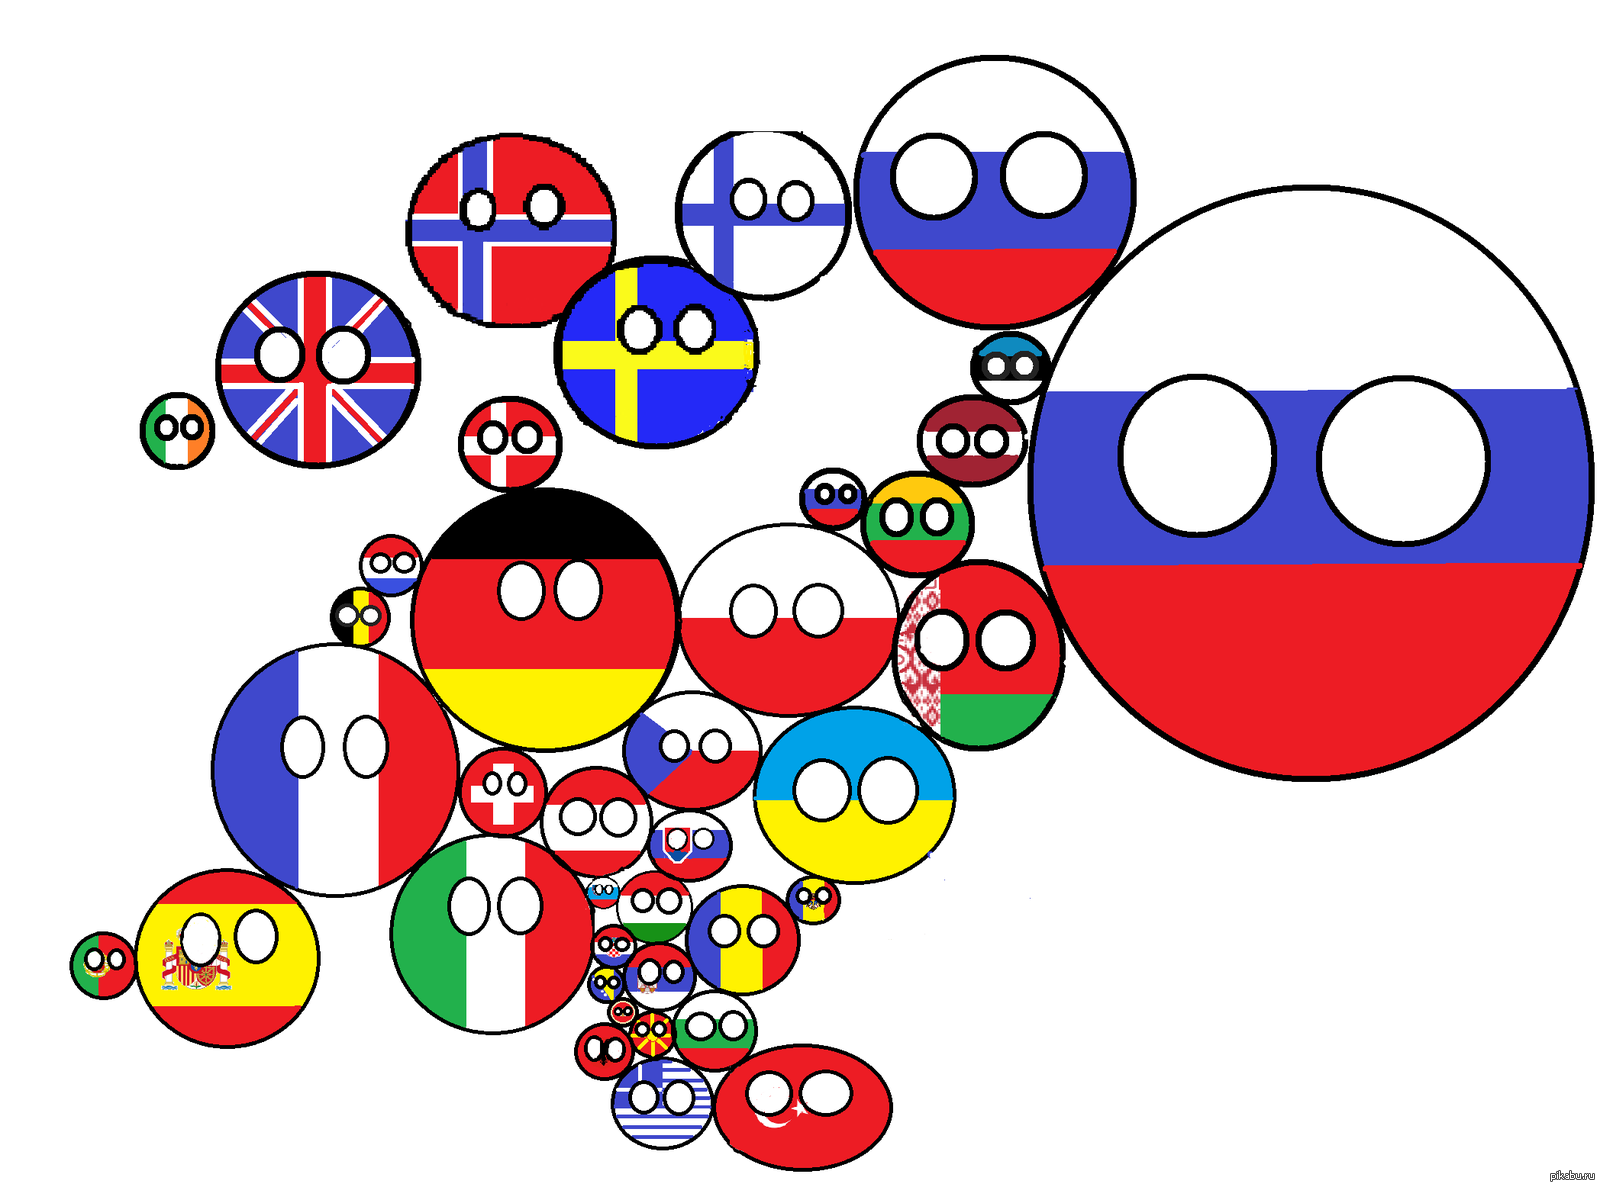 Countryballs europe. Флаги кантриболз страны. Флаги всех стран Европы кантриболз. Страны в виде шариков. Человечки в виде флагов стран.